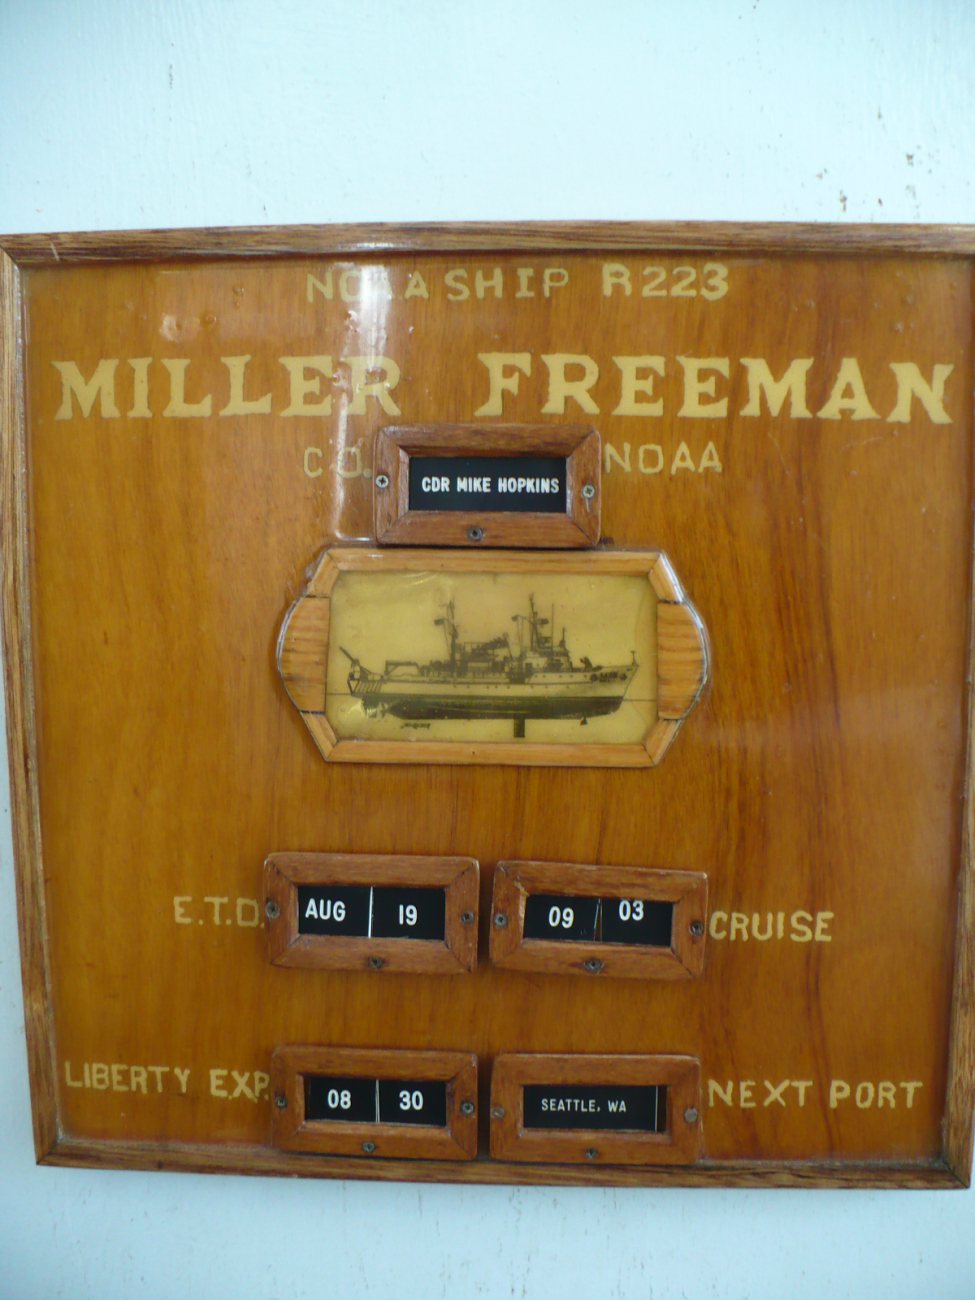 Sailing board of NOAA Ship MILLER FREEMAN